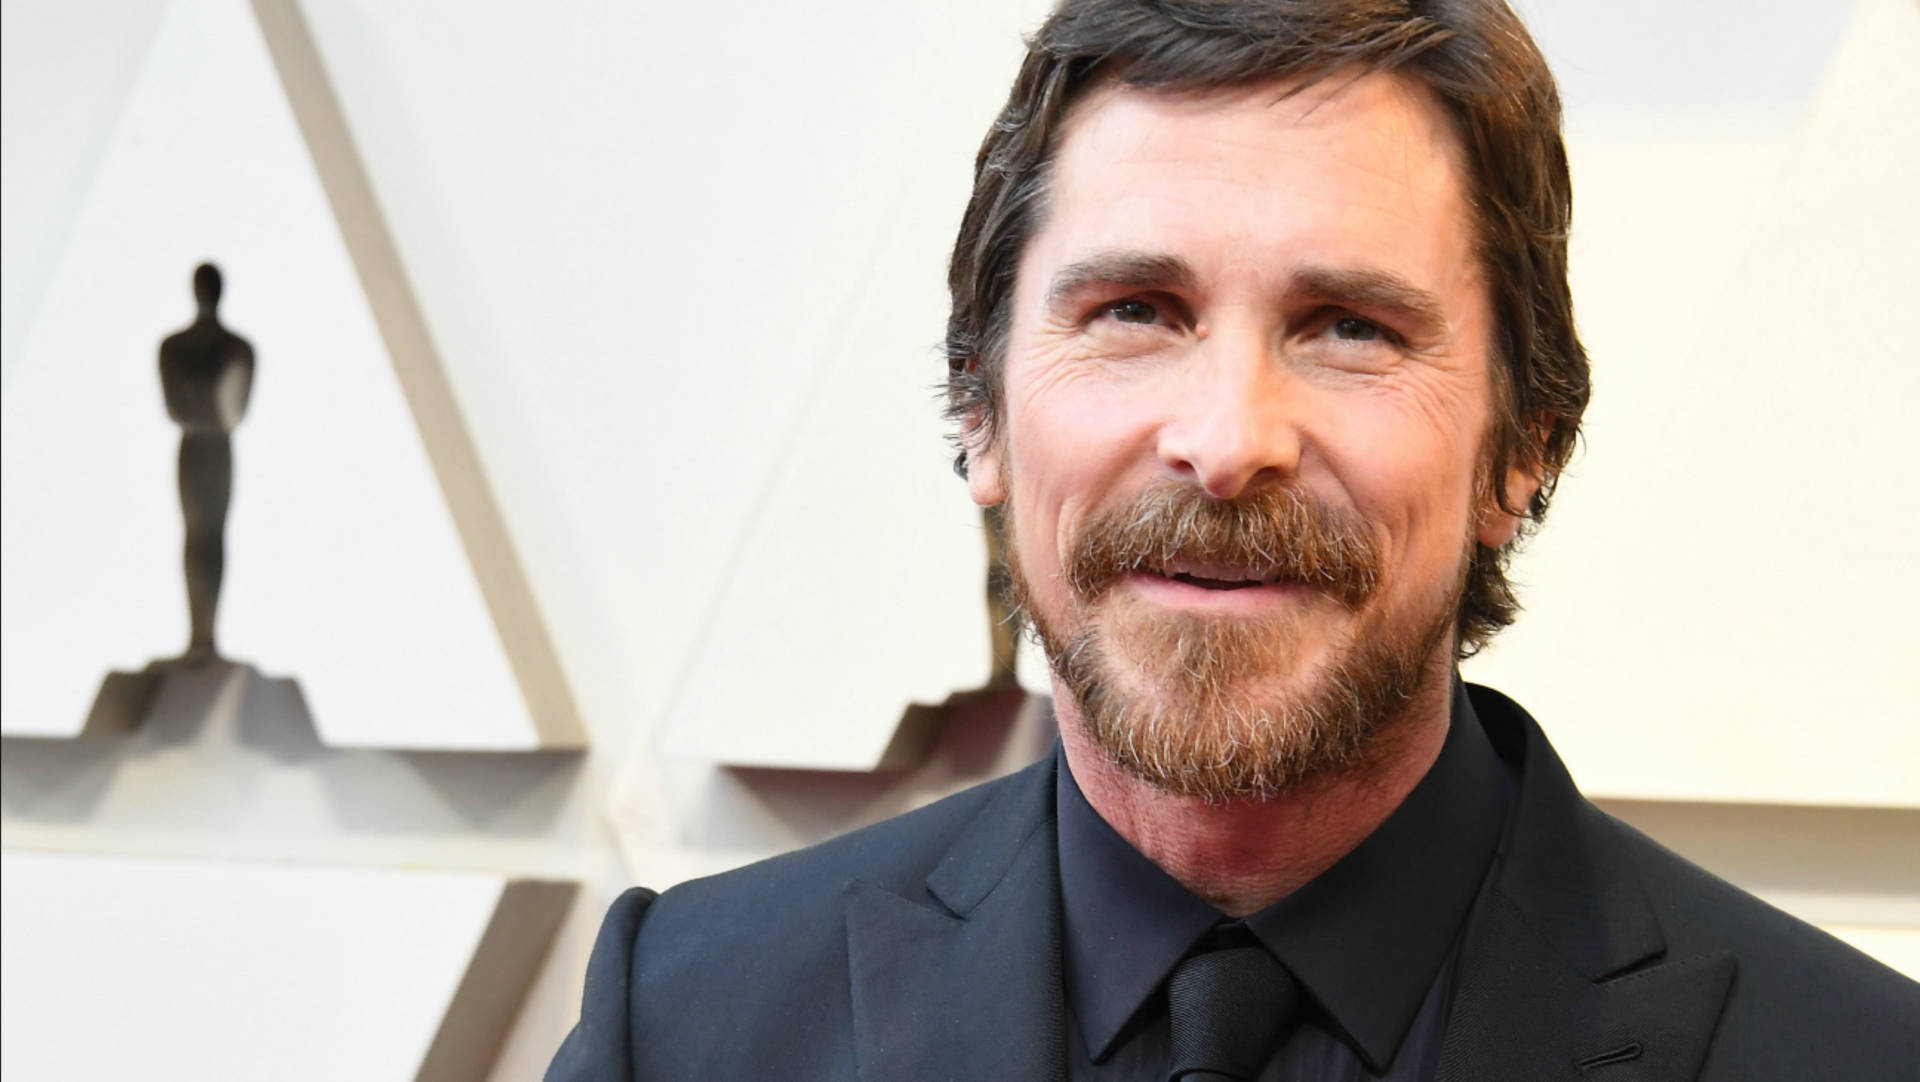 Christian Bale At Oscars 2011